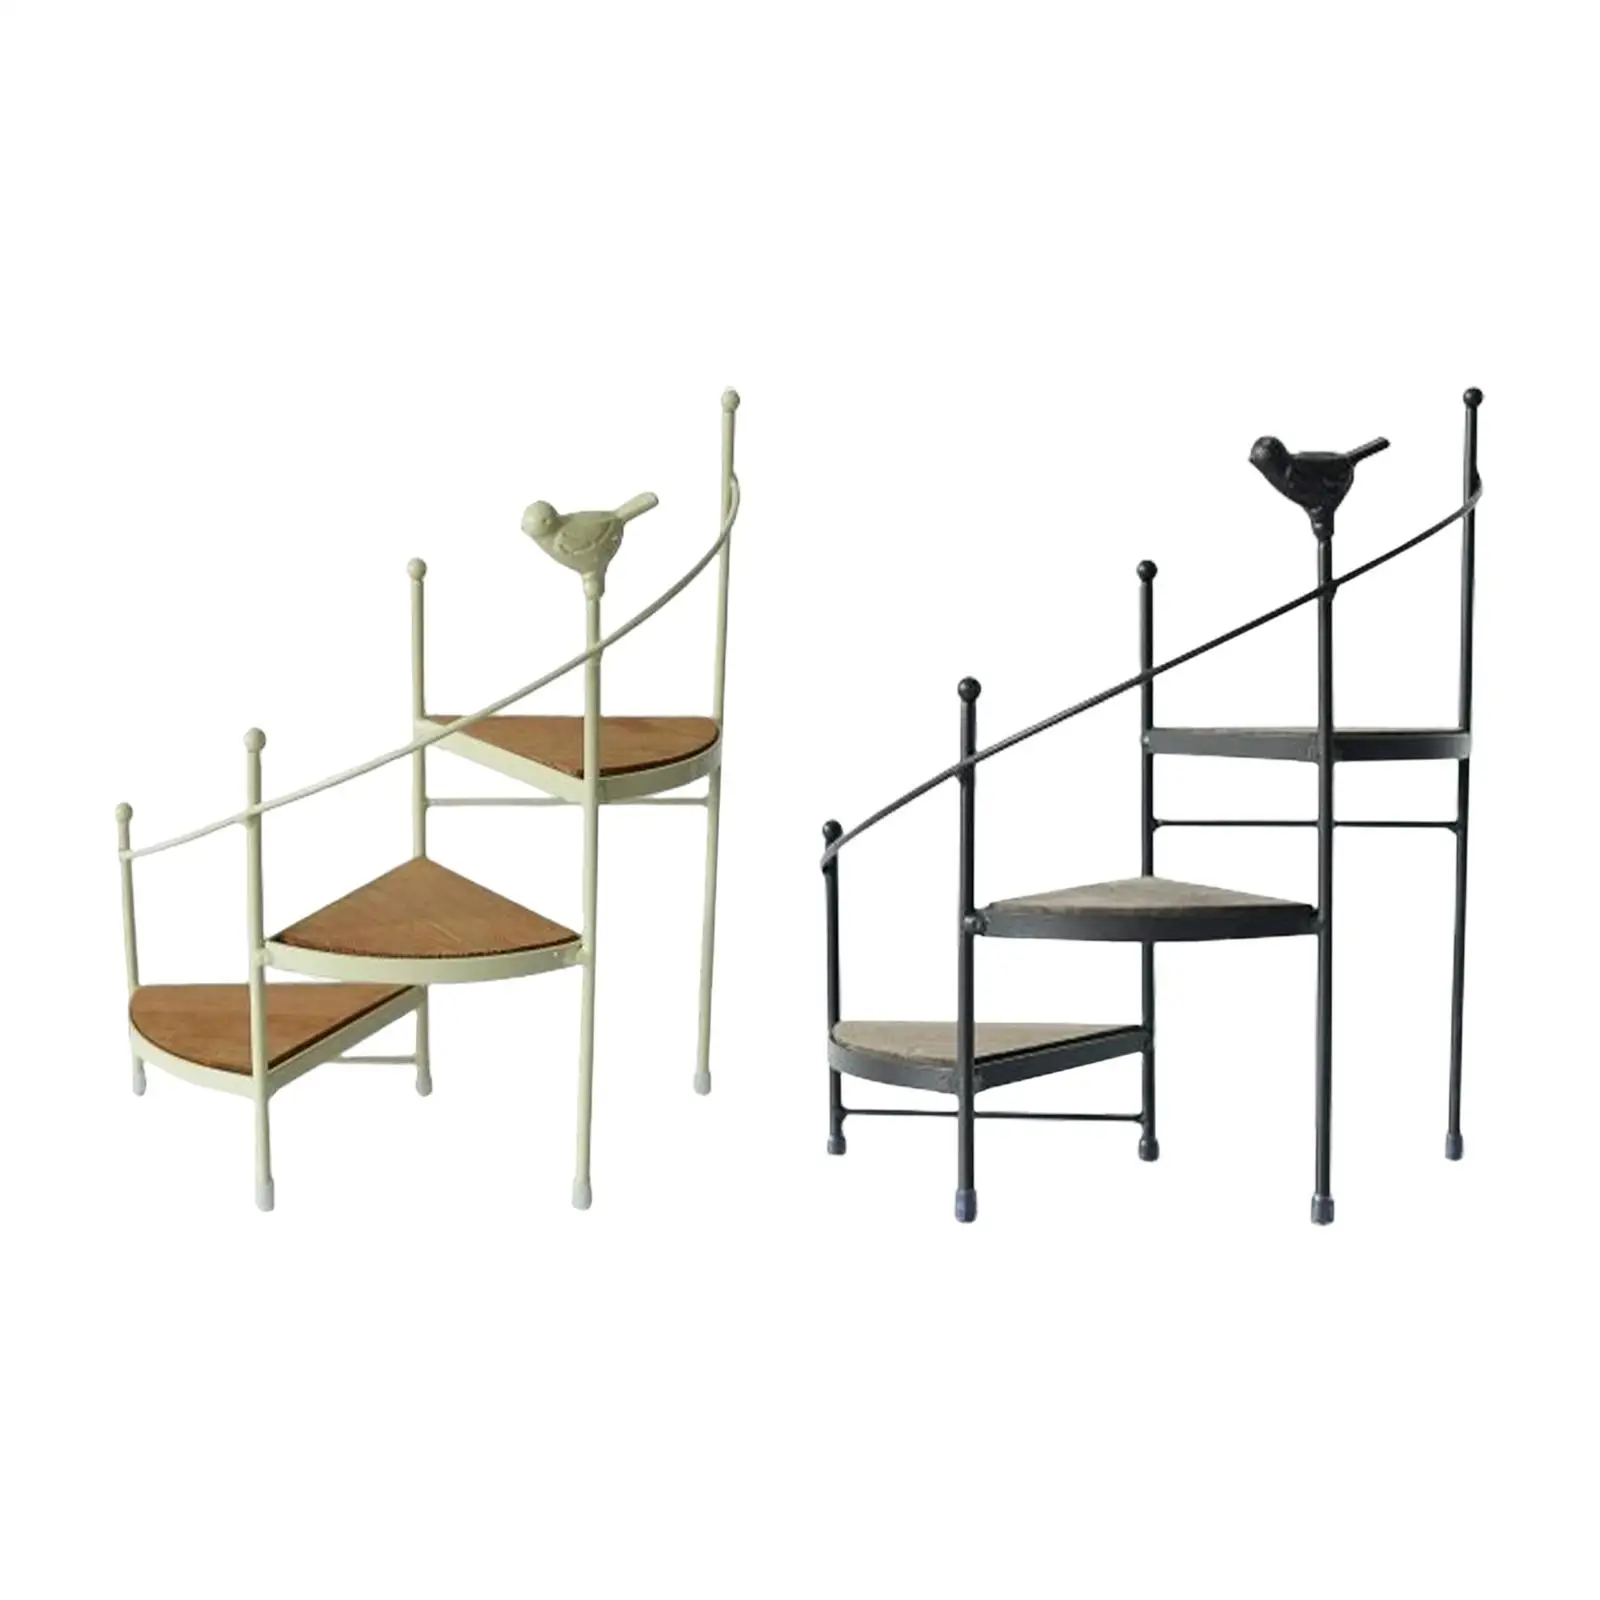 3 Tier Stair Style Metal Plant Stand Multi Tie Metal Modern Decorative Desktop Holder for Indoor Living Room Corner Outdoor